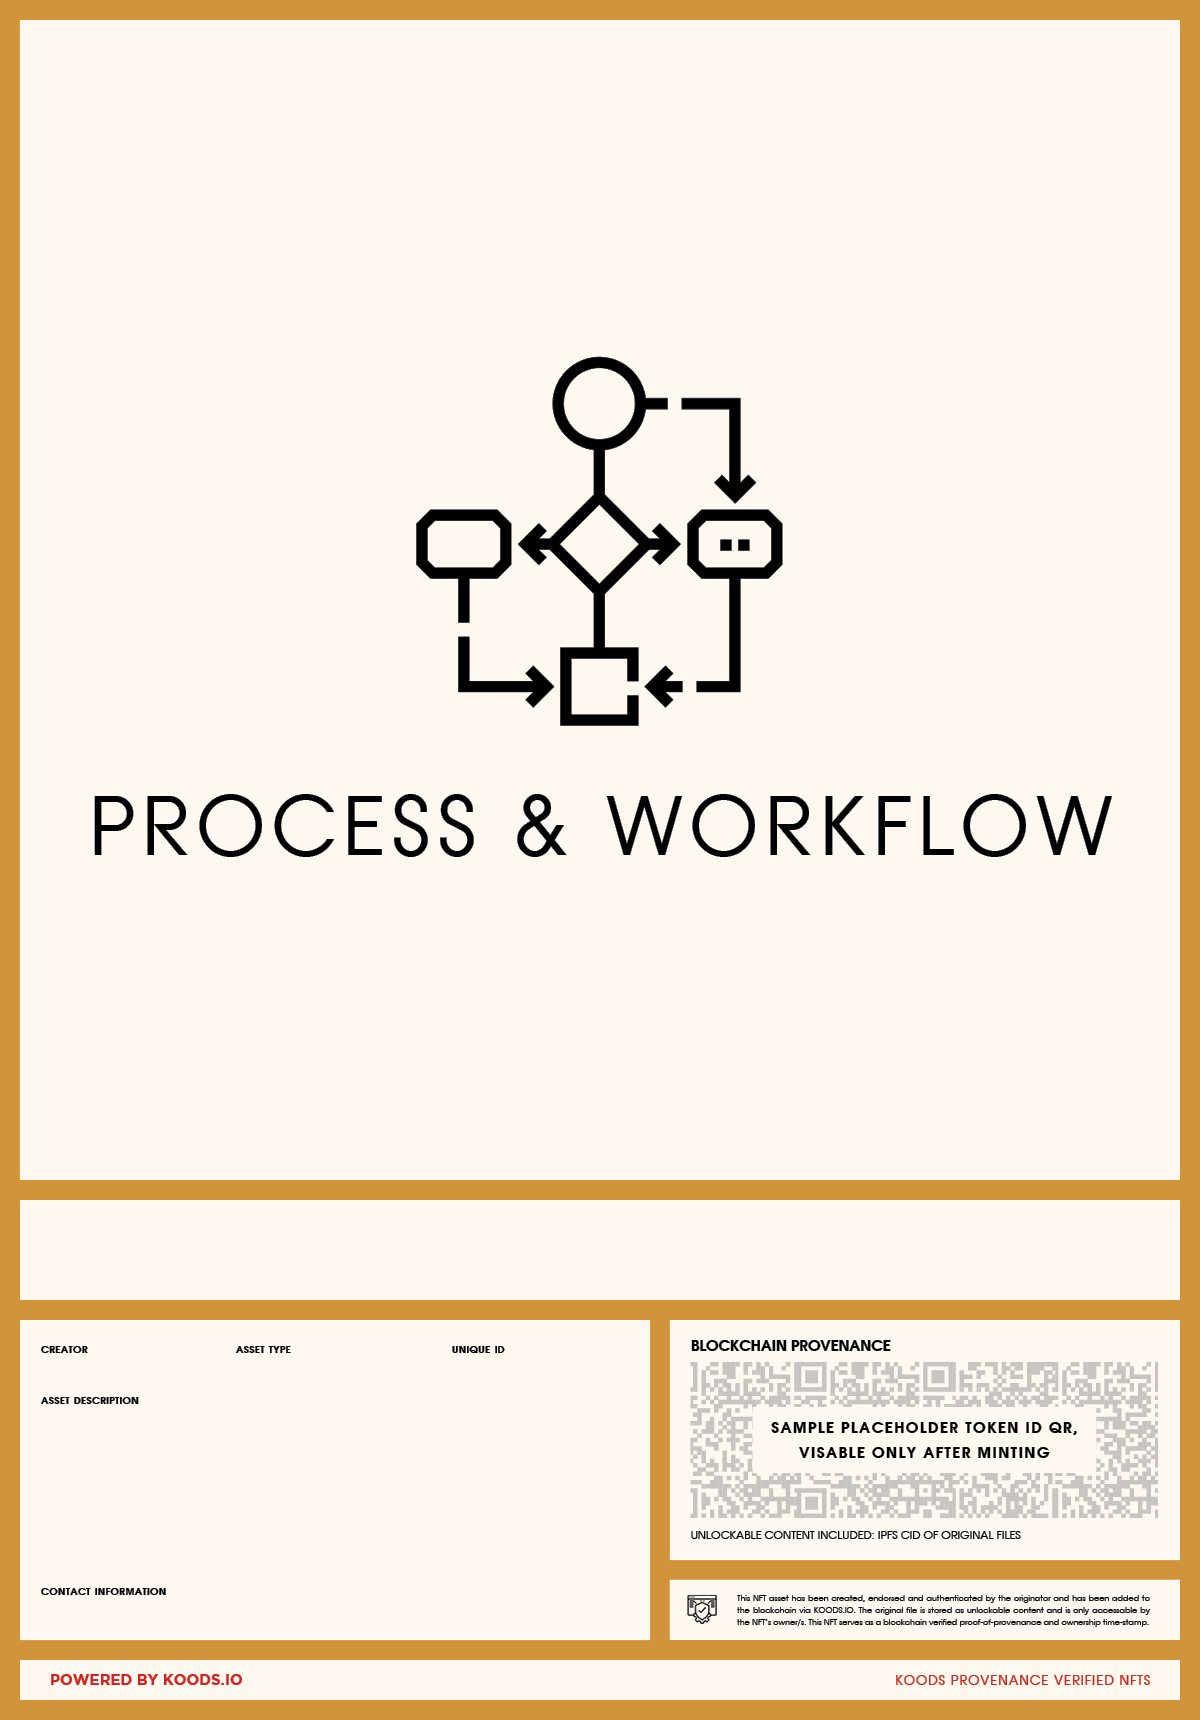 Process & Workflow